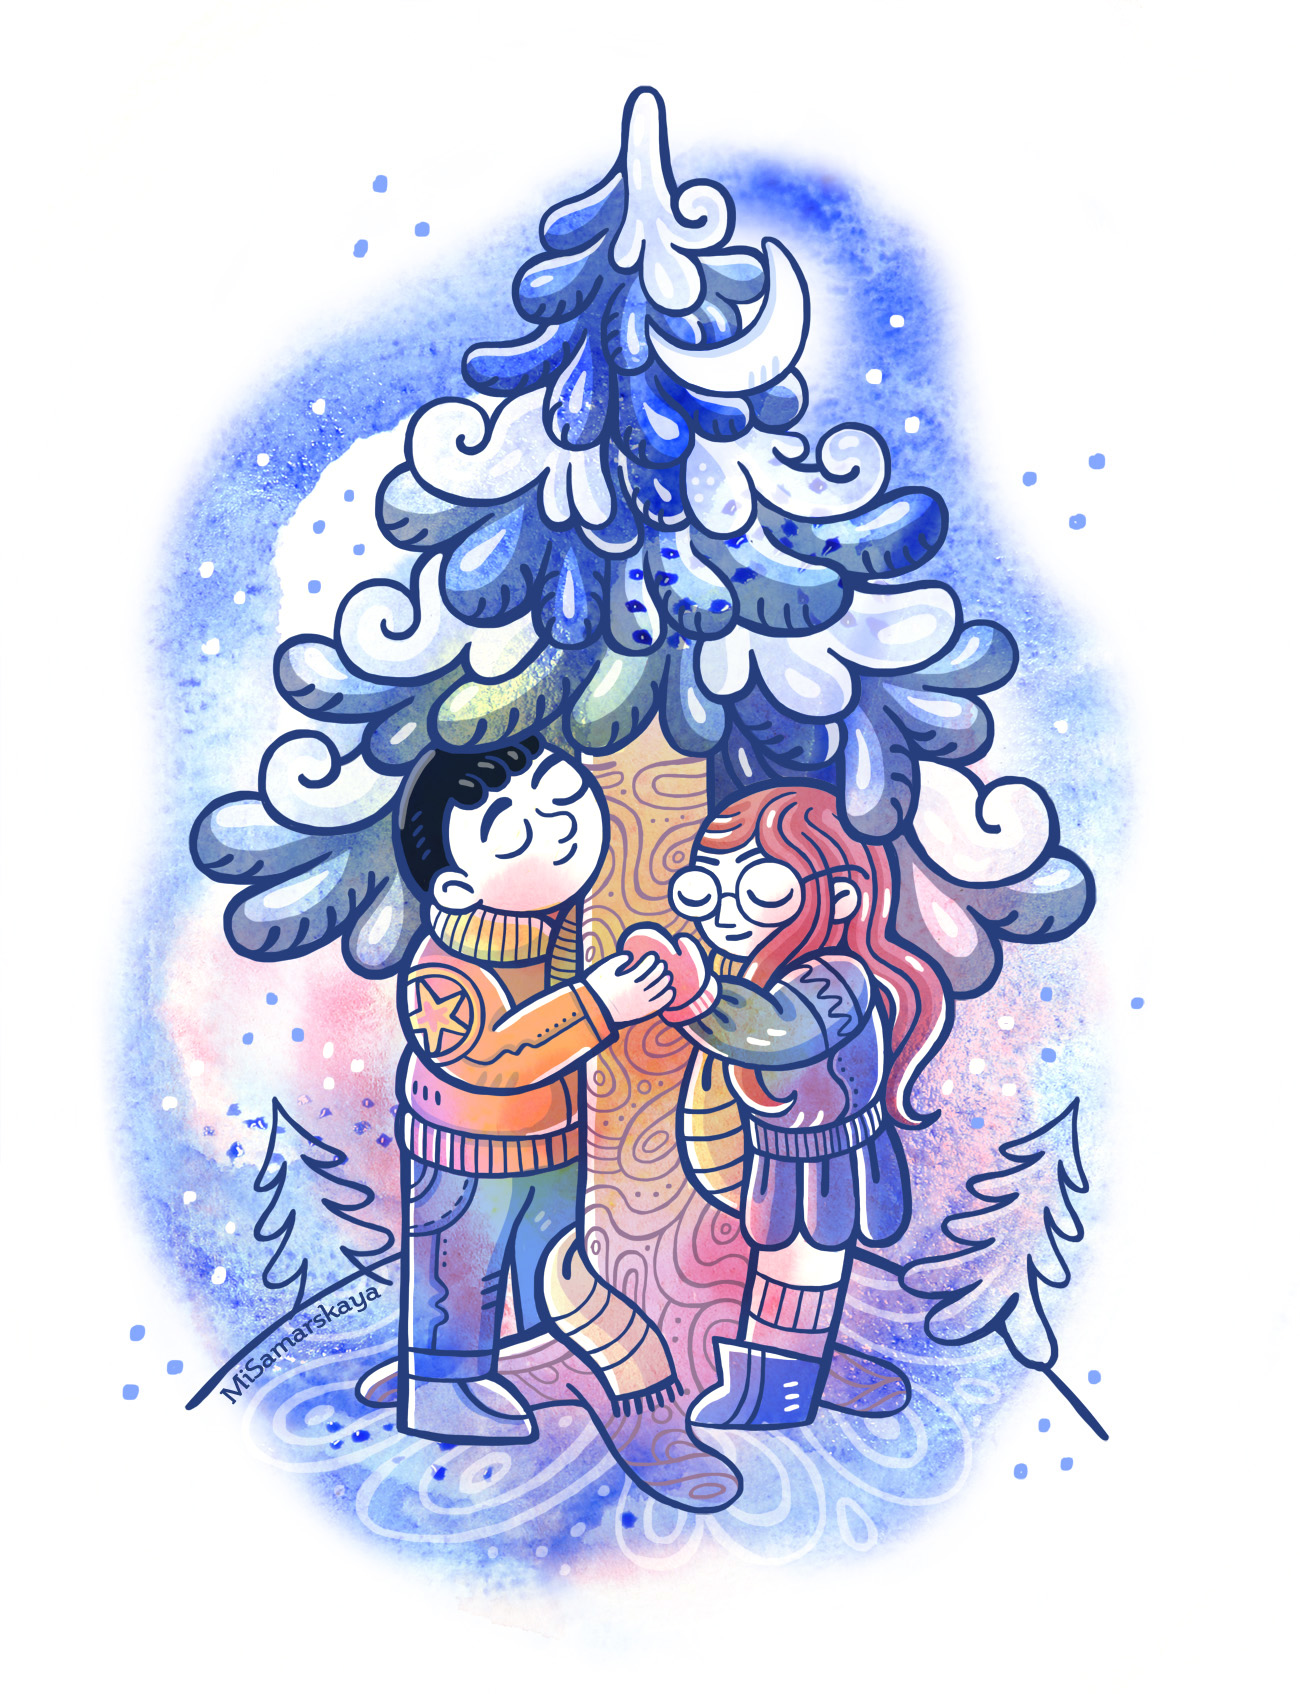 Hugs with a tree